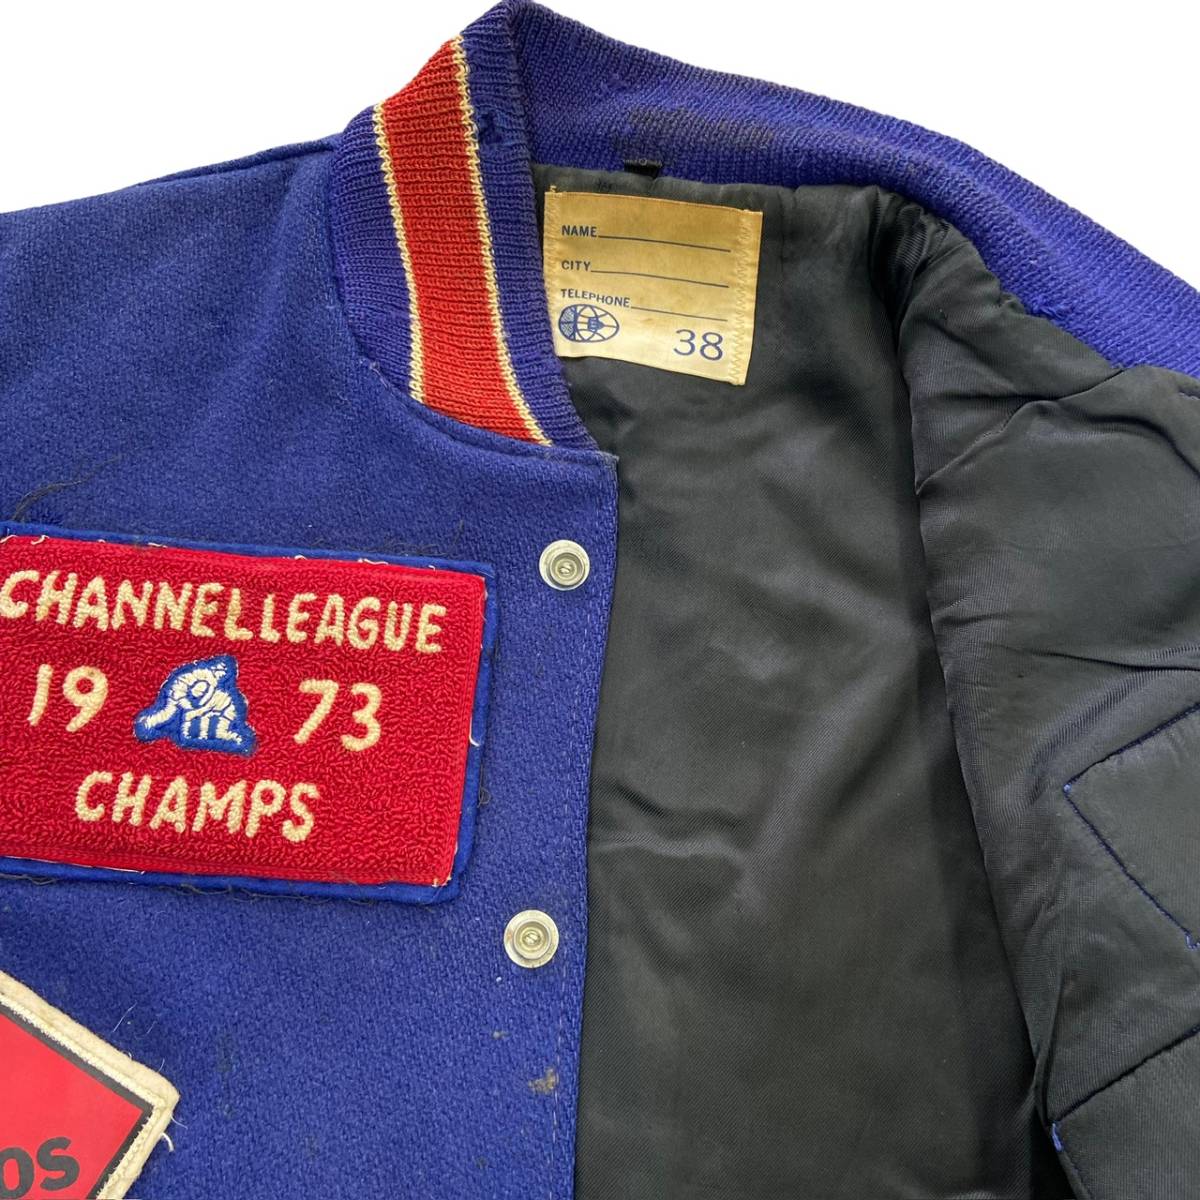 70s Delong Versity Jacket куртка 38 шерсть Award Stadium жакет вышивка нашивка рукав кожа кожа USA Vintage 